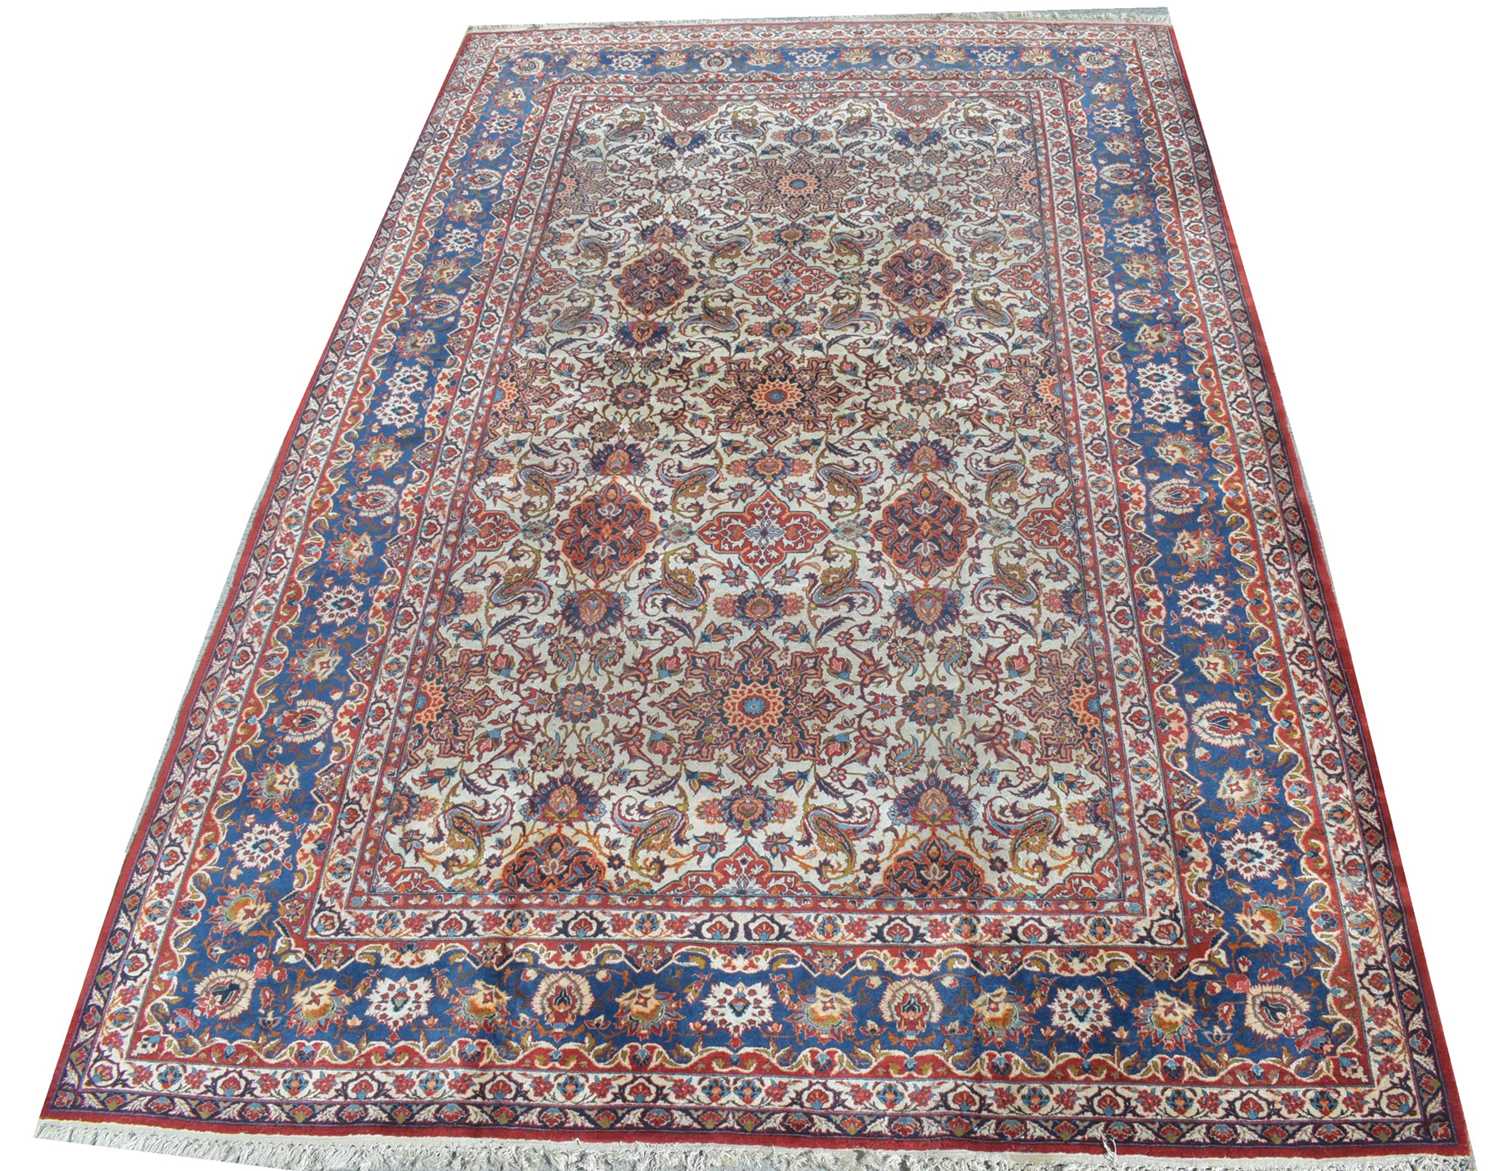 881 - Isfahan carpet